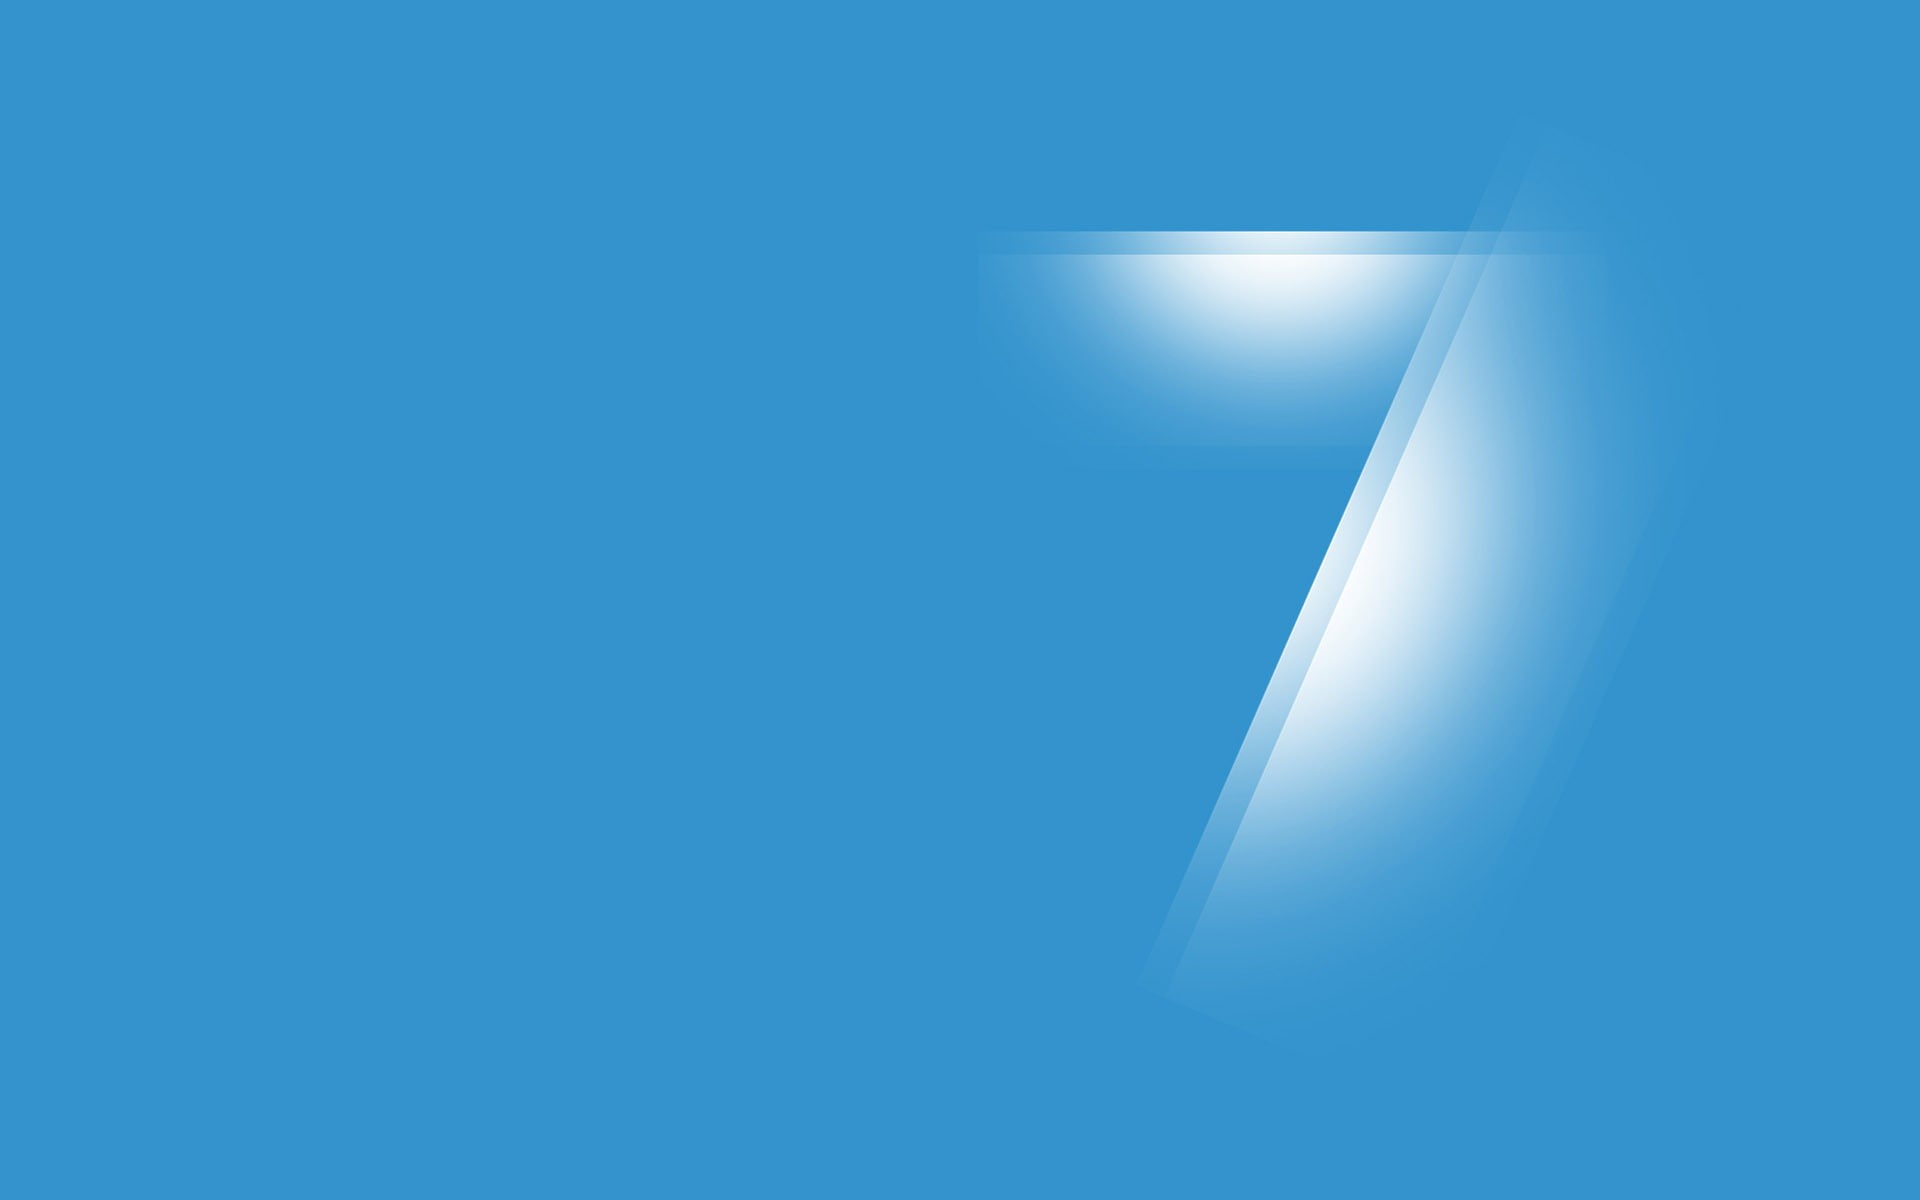 Windows 7, Microsoft Windows, minimalism, numbers, blue background